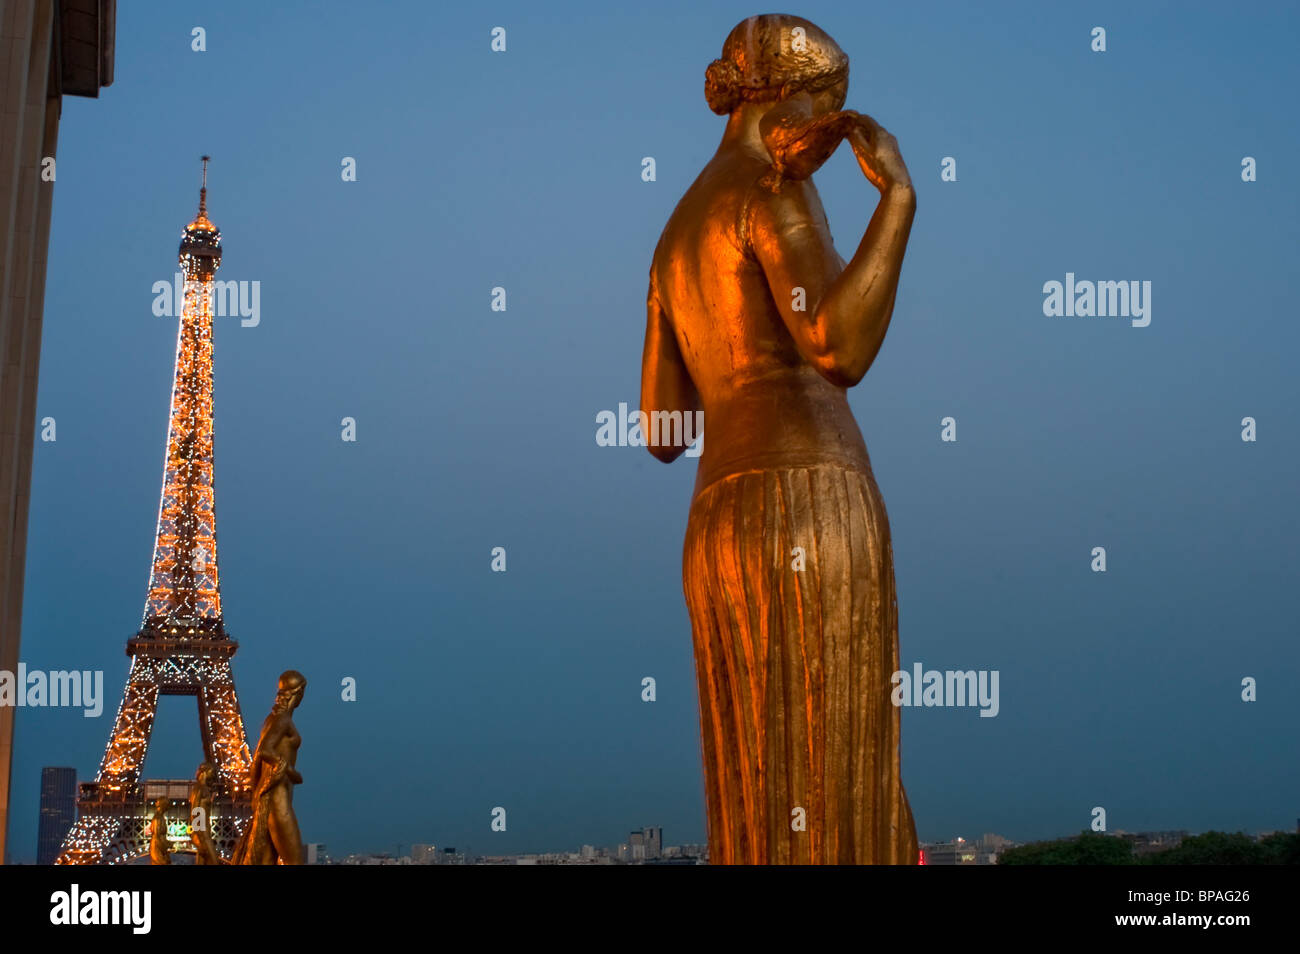 Parigi, Francia, Torre Eiffel, illuminazione notturna con statua, scultura figura femminile Foto Stock